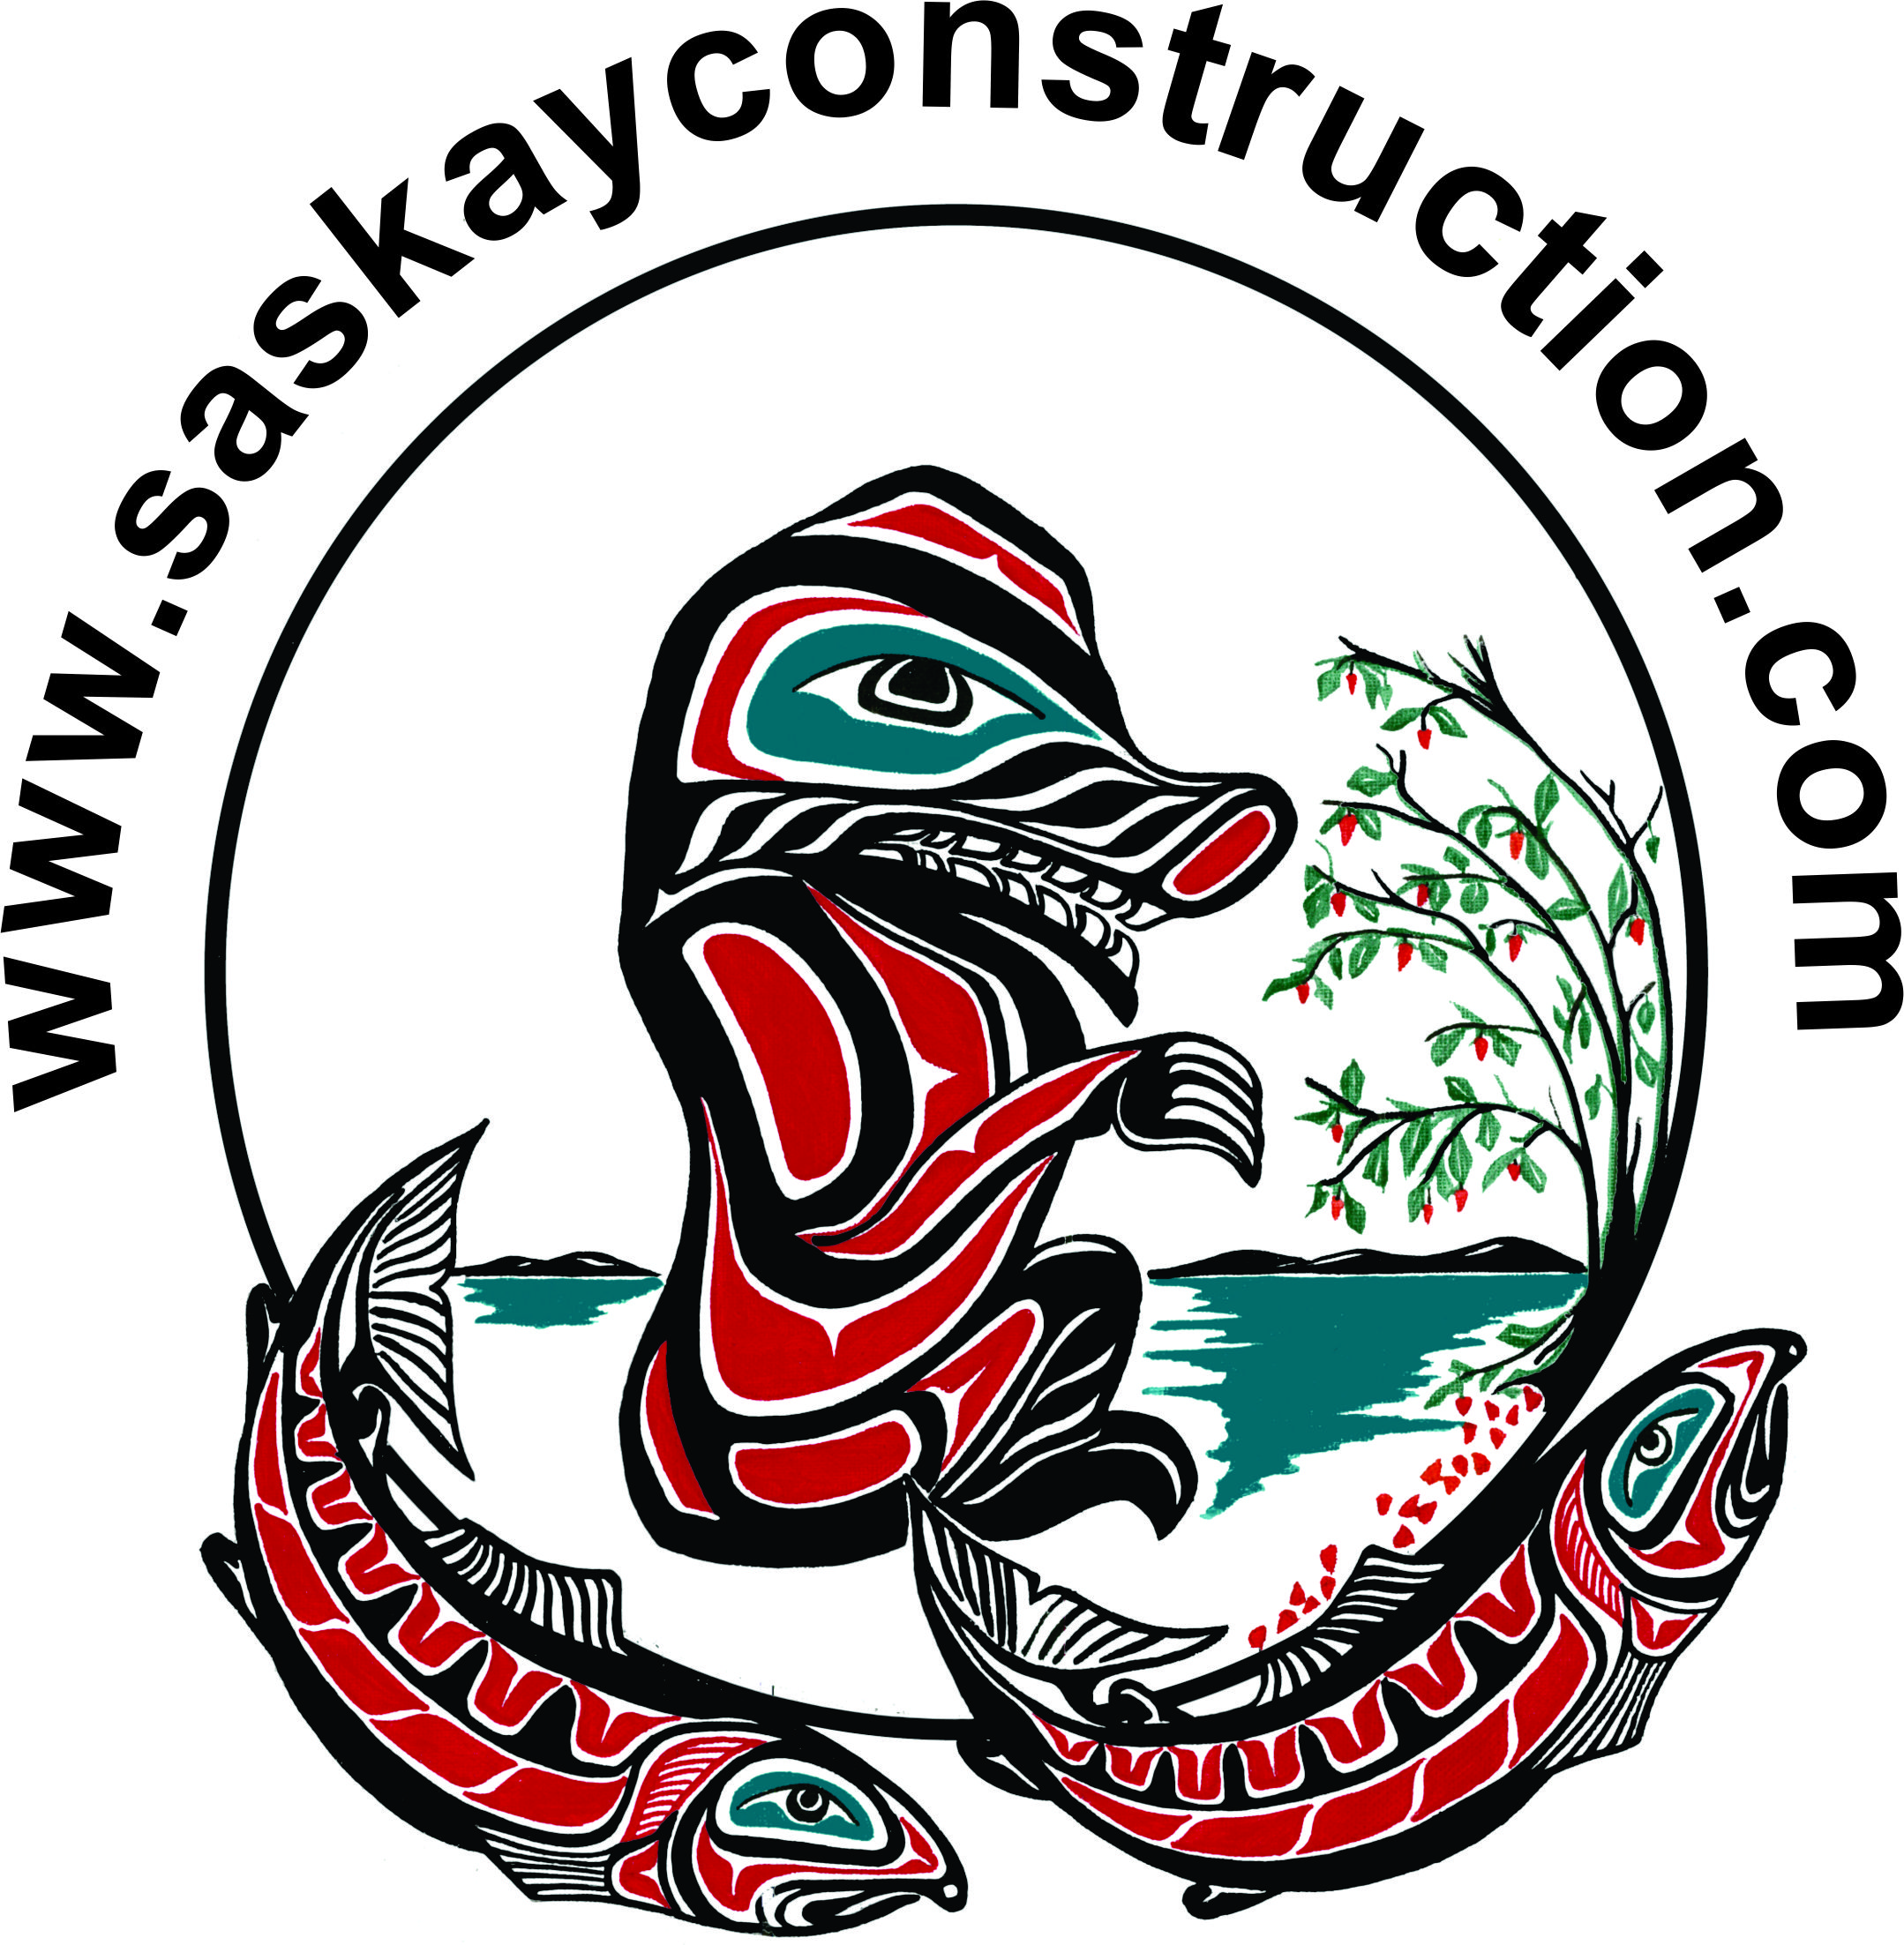 Saskay Construction